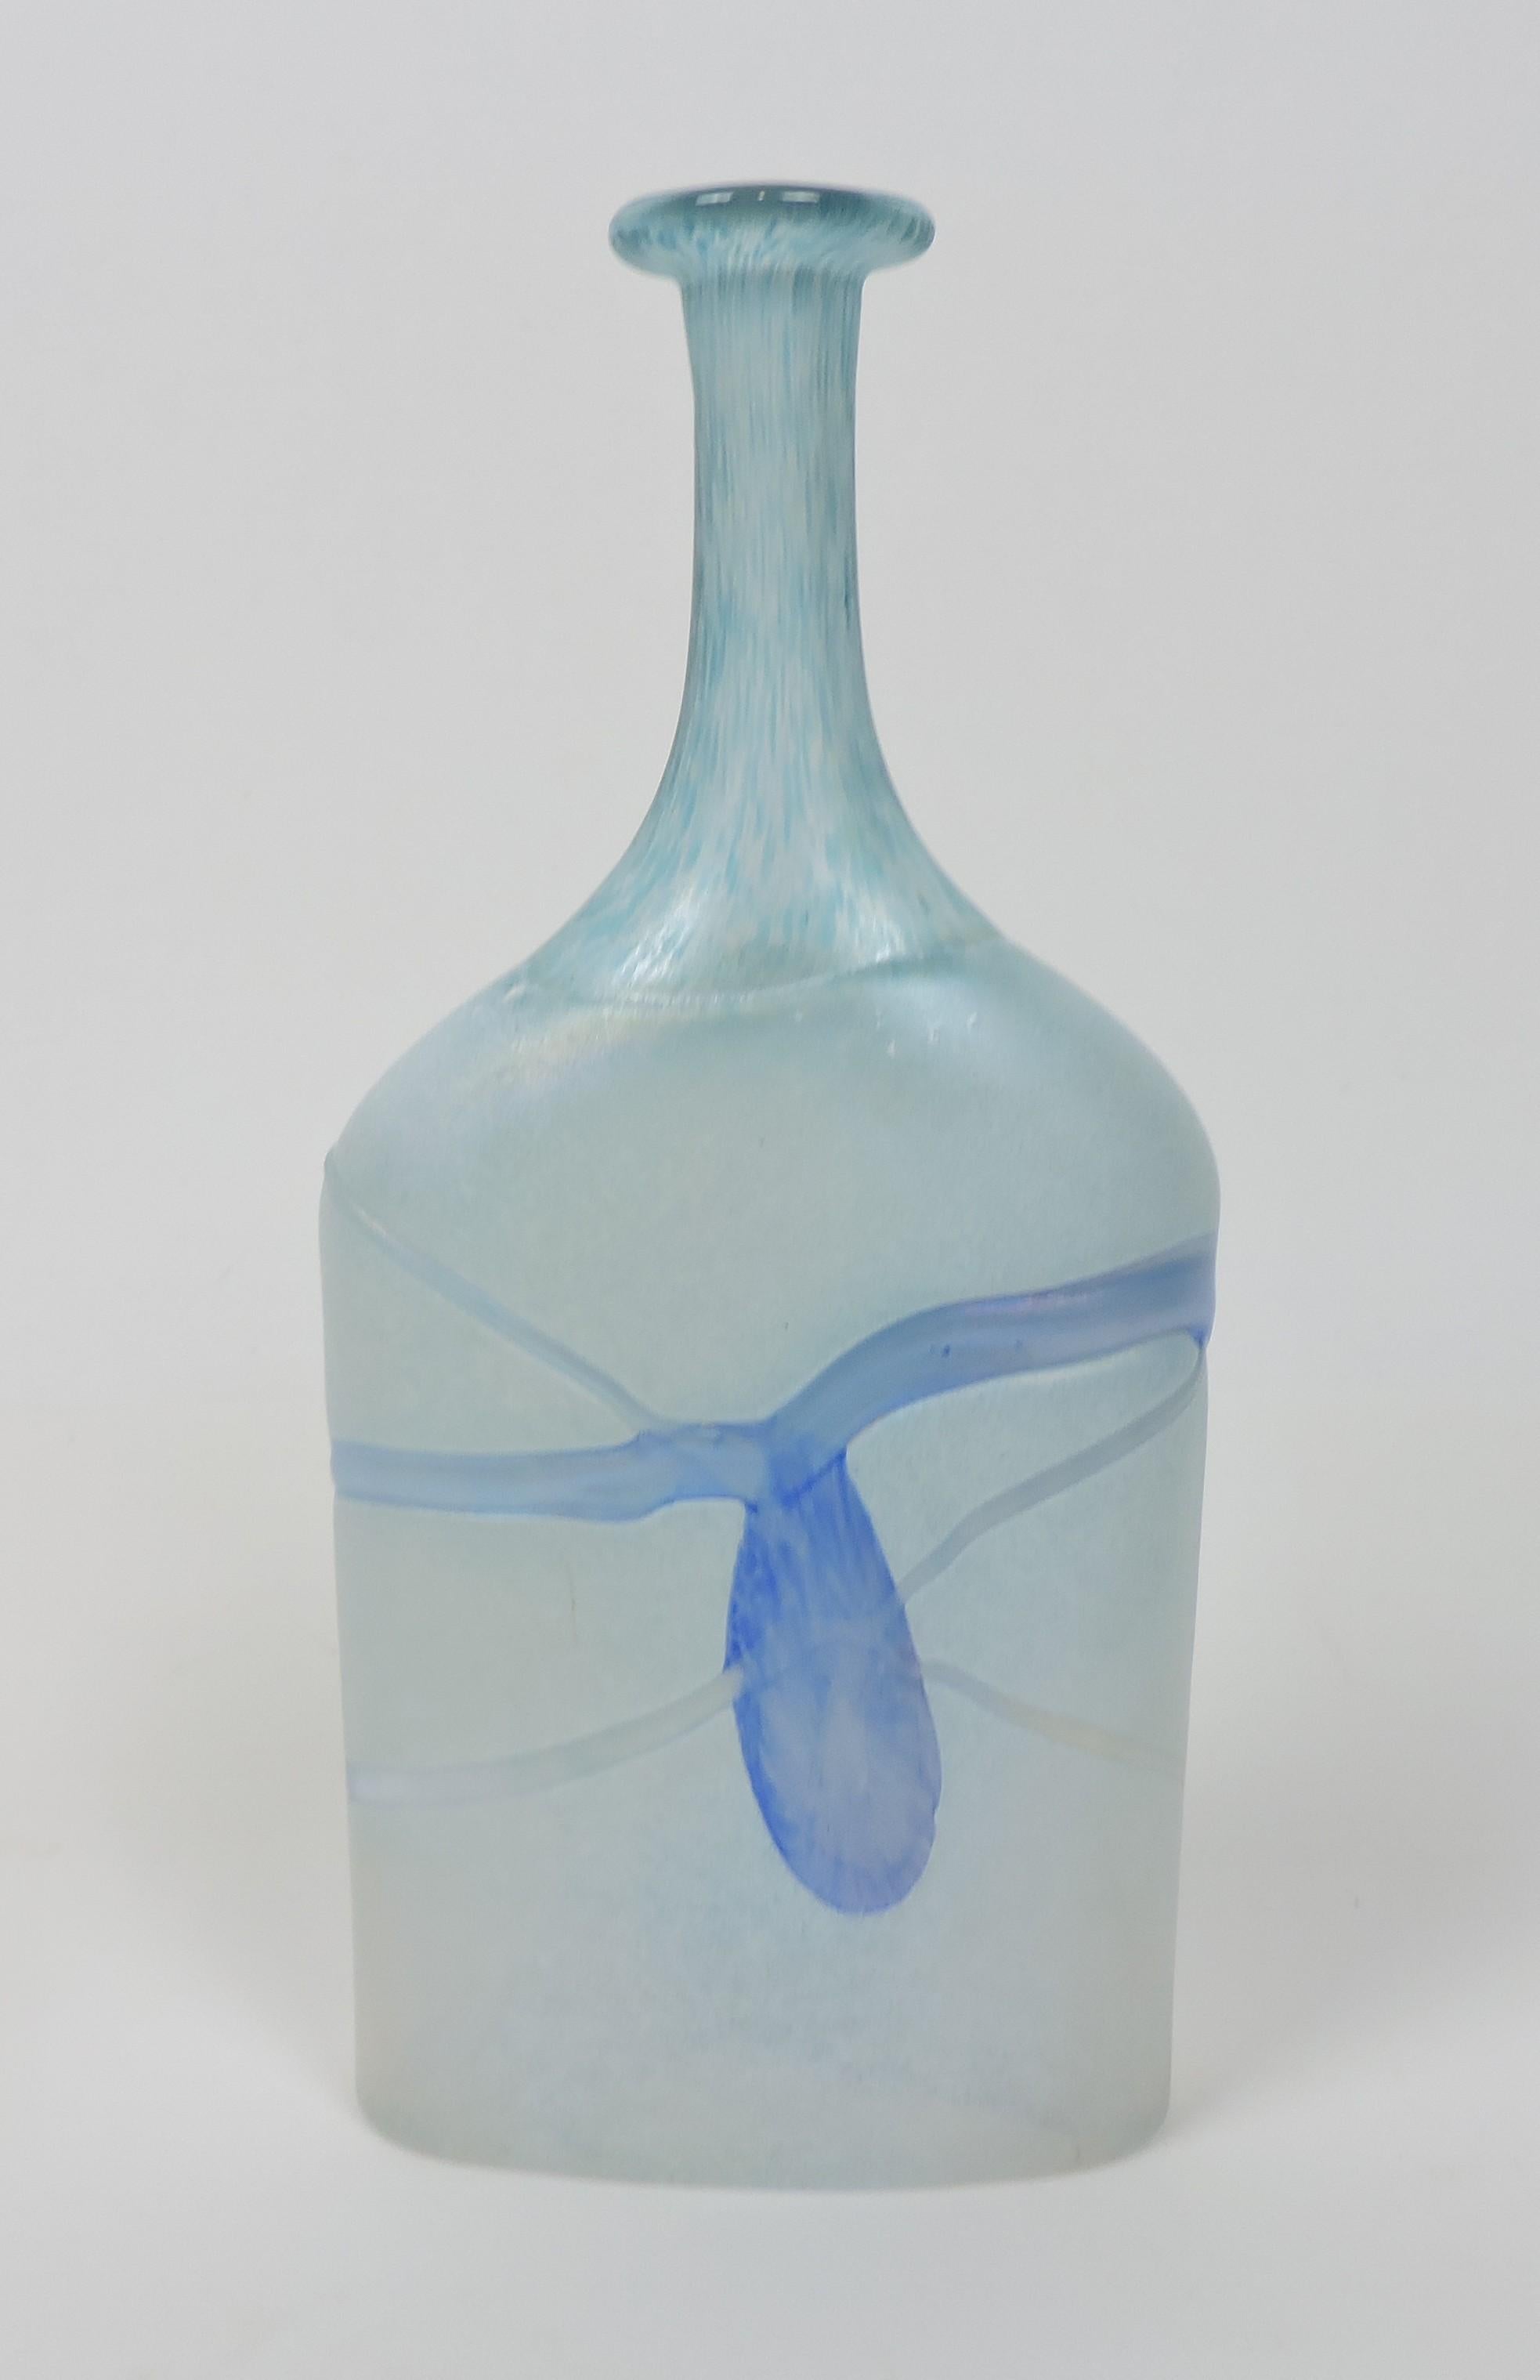 Bertil Vallien Kosta Boda Glass Vase Galaxy Blue Series 1980s Artists Collection For Sale 2